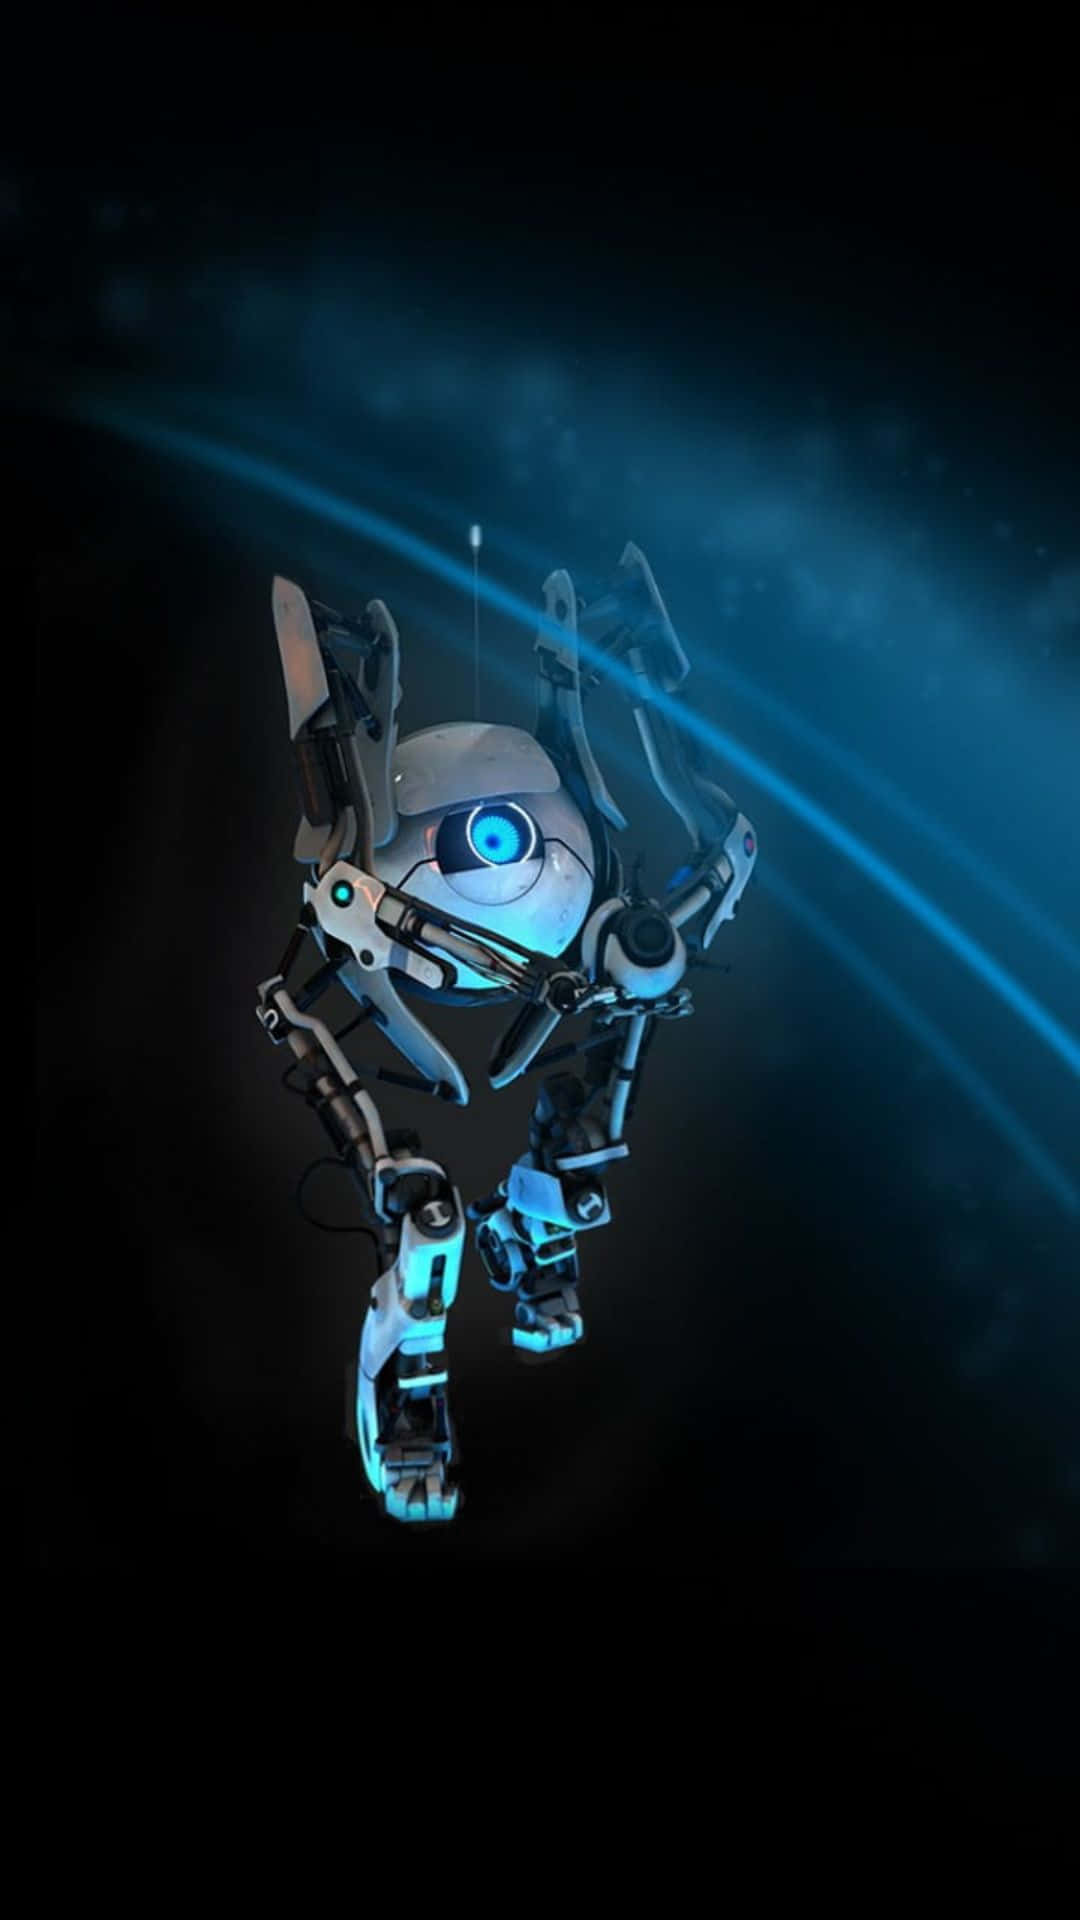 Pixel3 Portal 2 Bakgrund Robot Blå Strålar.